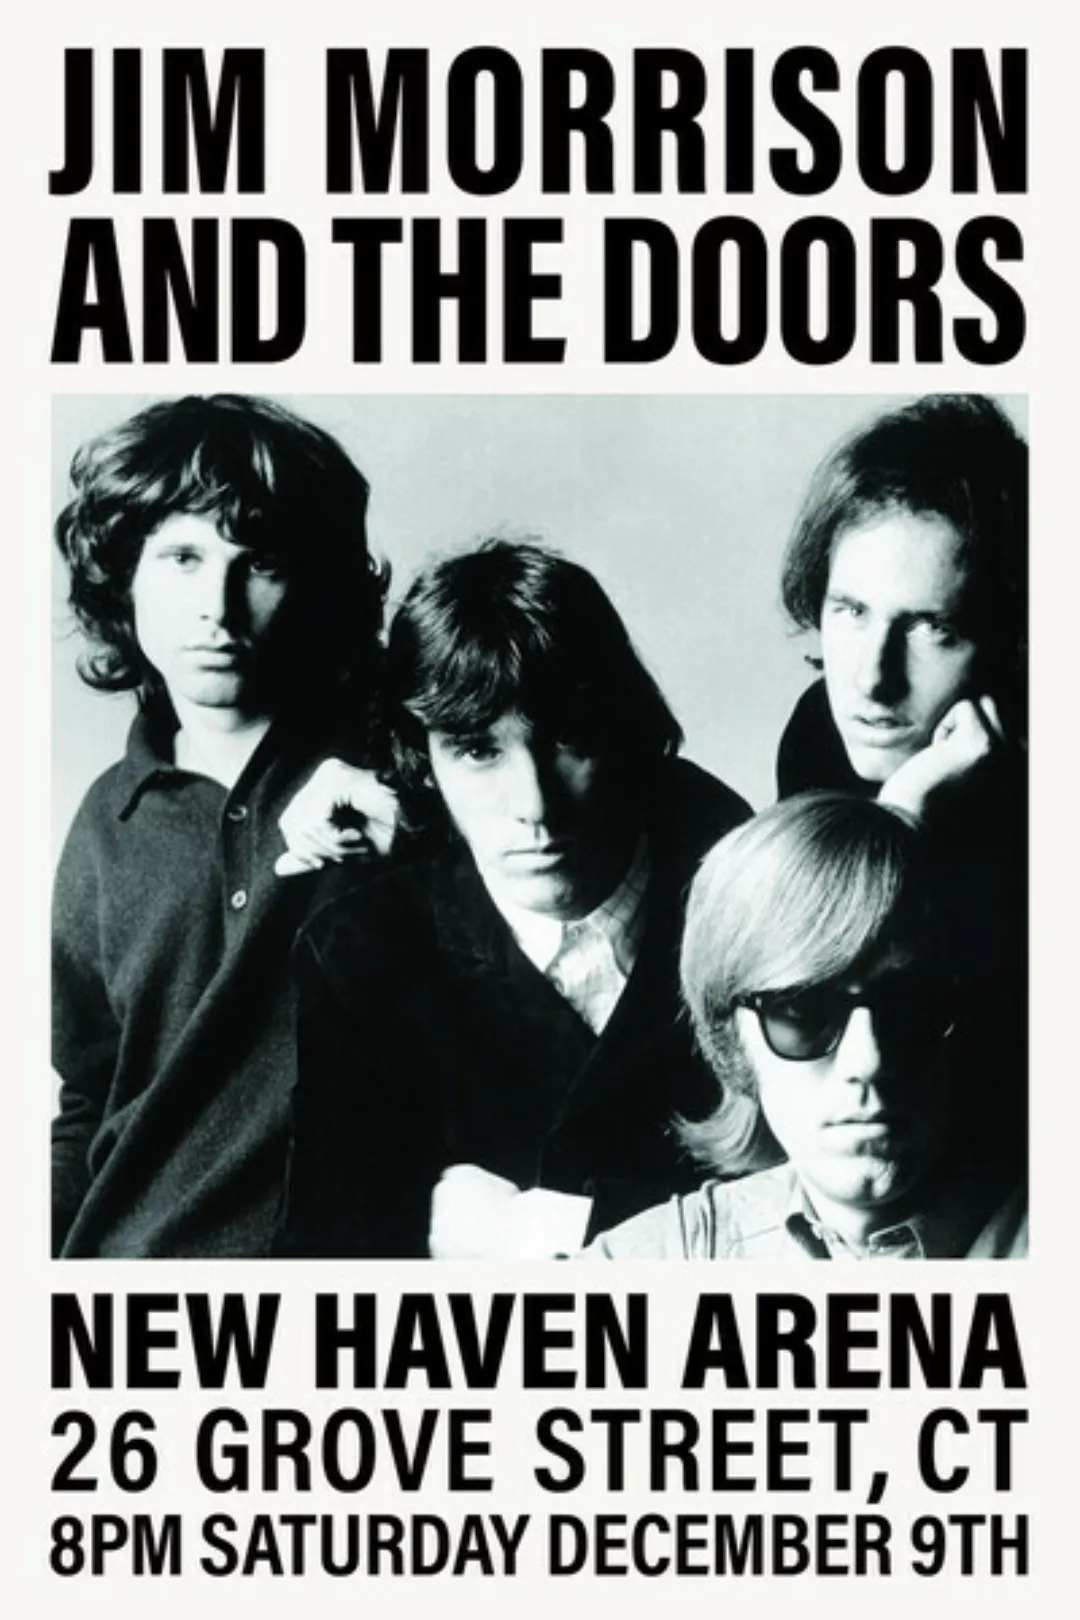 Poster / Leinwandbild - Jim Morrison And The Doors - New Haven Arena günstig online kaufen